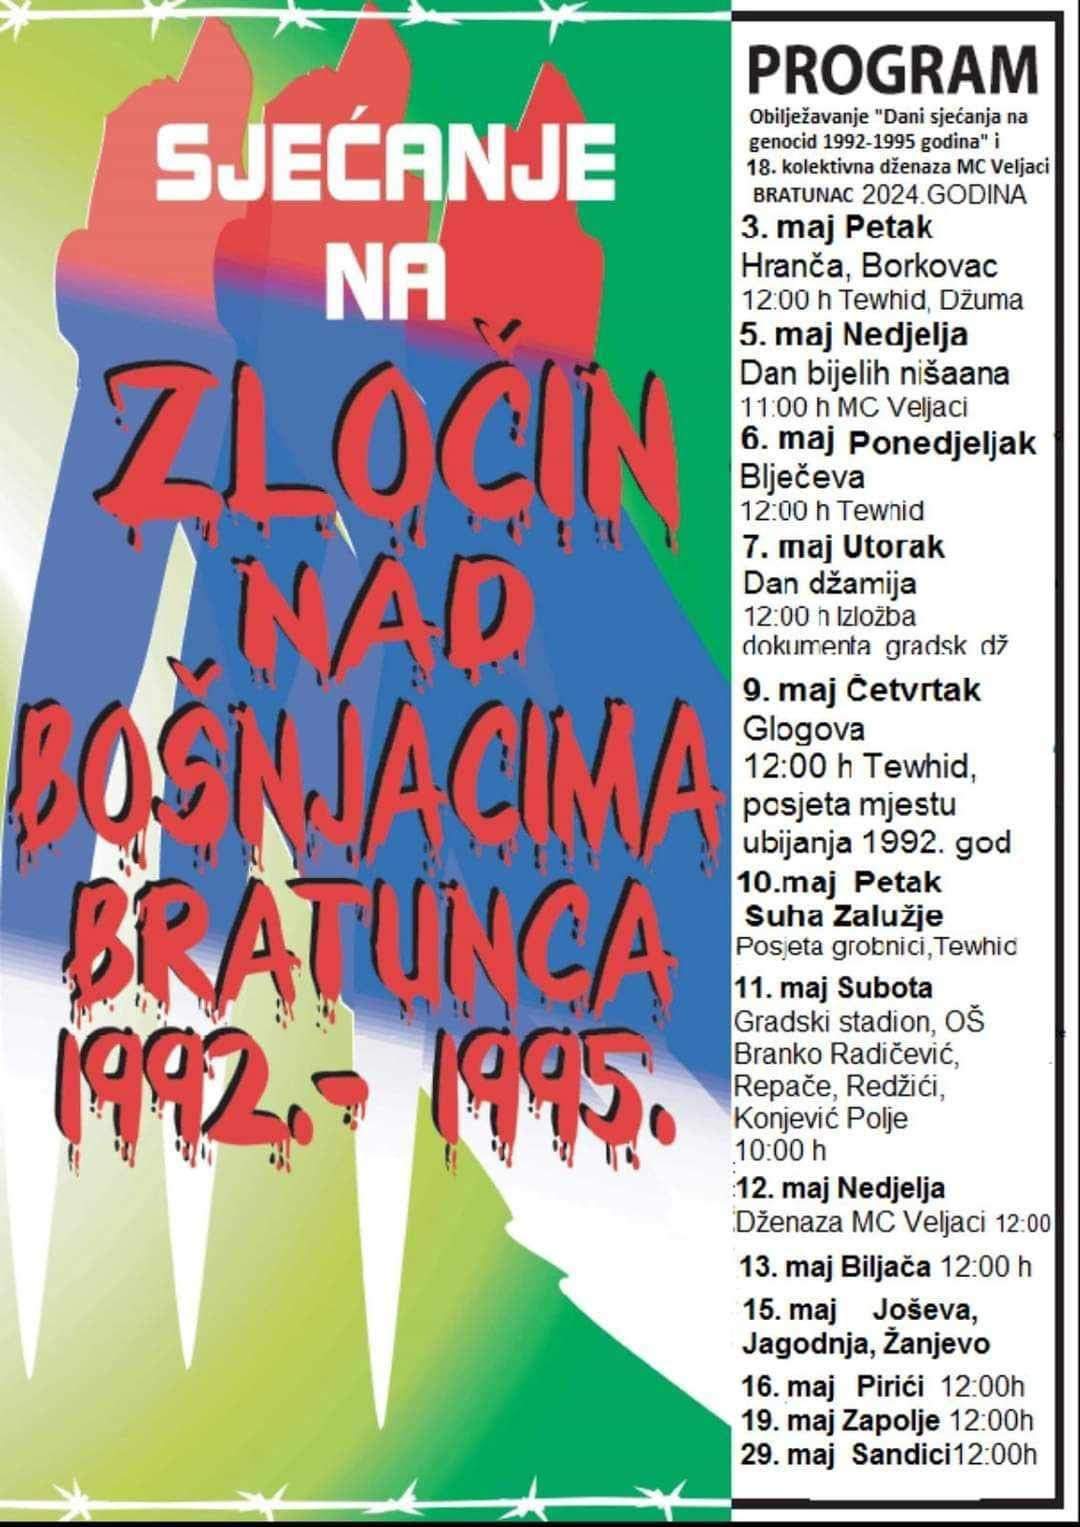 unnamed.jpg - Sjećanje na zločin nad Bošnjacima Bratunca 1992-1995. od 3. do 29. maja